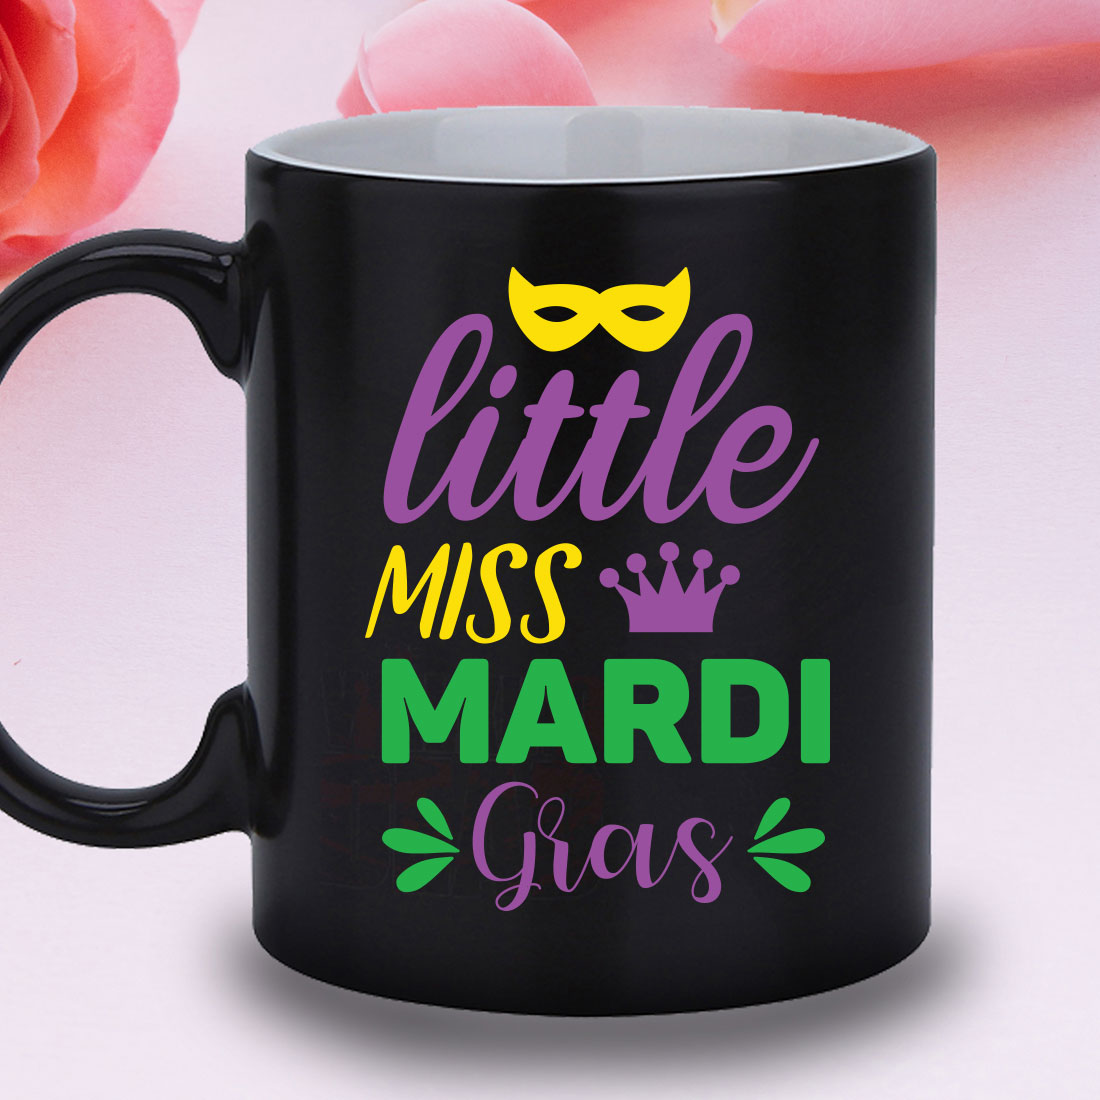 Black coffee mug with a little miss mardi gras design.